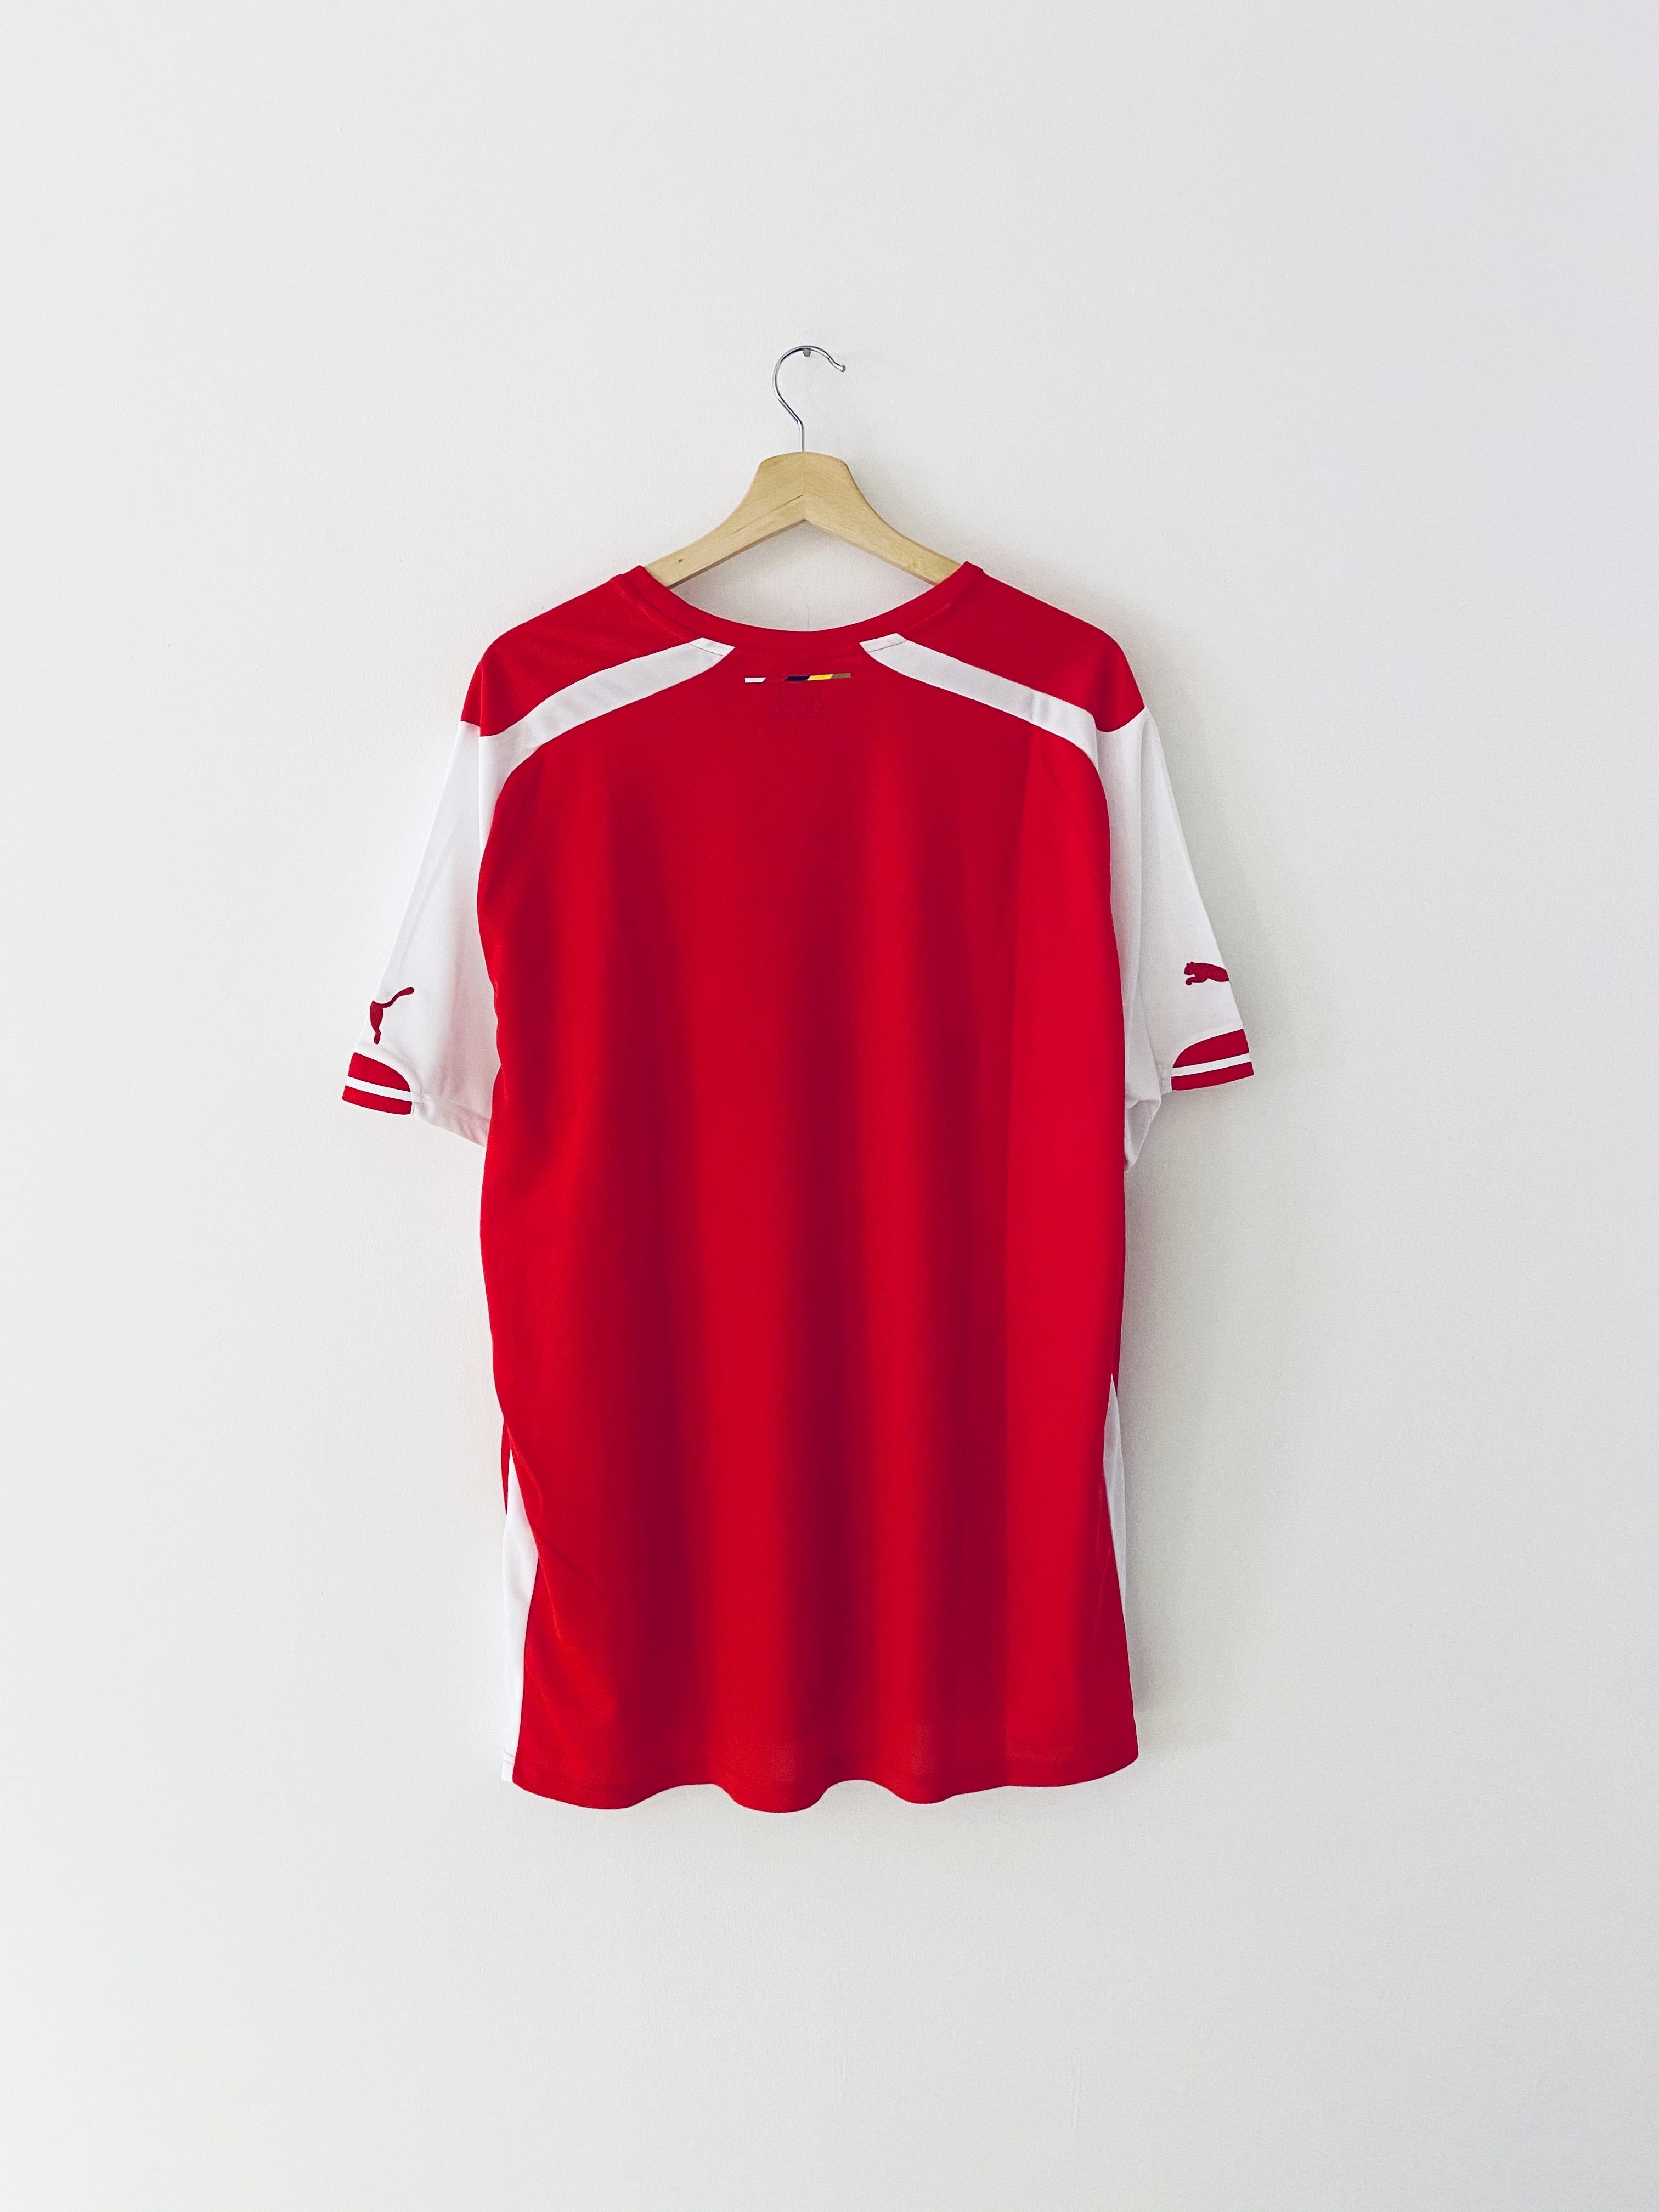 2014/15 Arsenal Home Shirt (XXL) BNWT